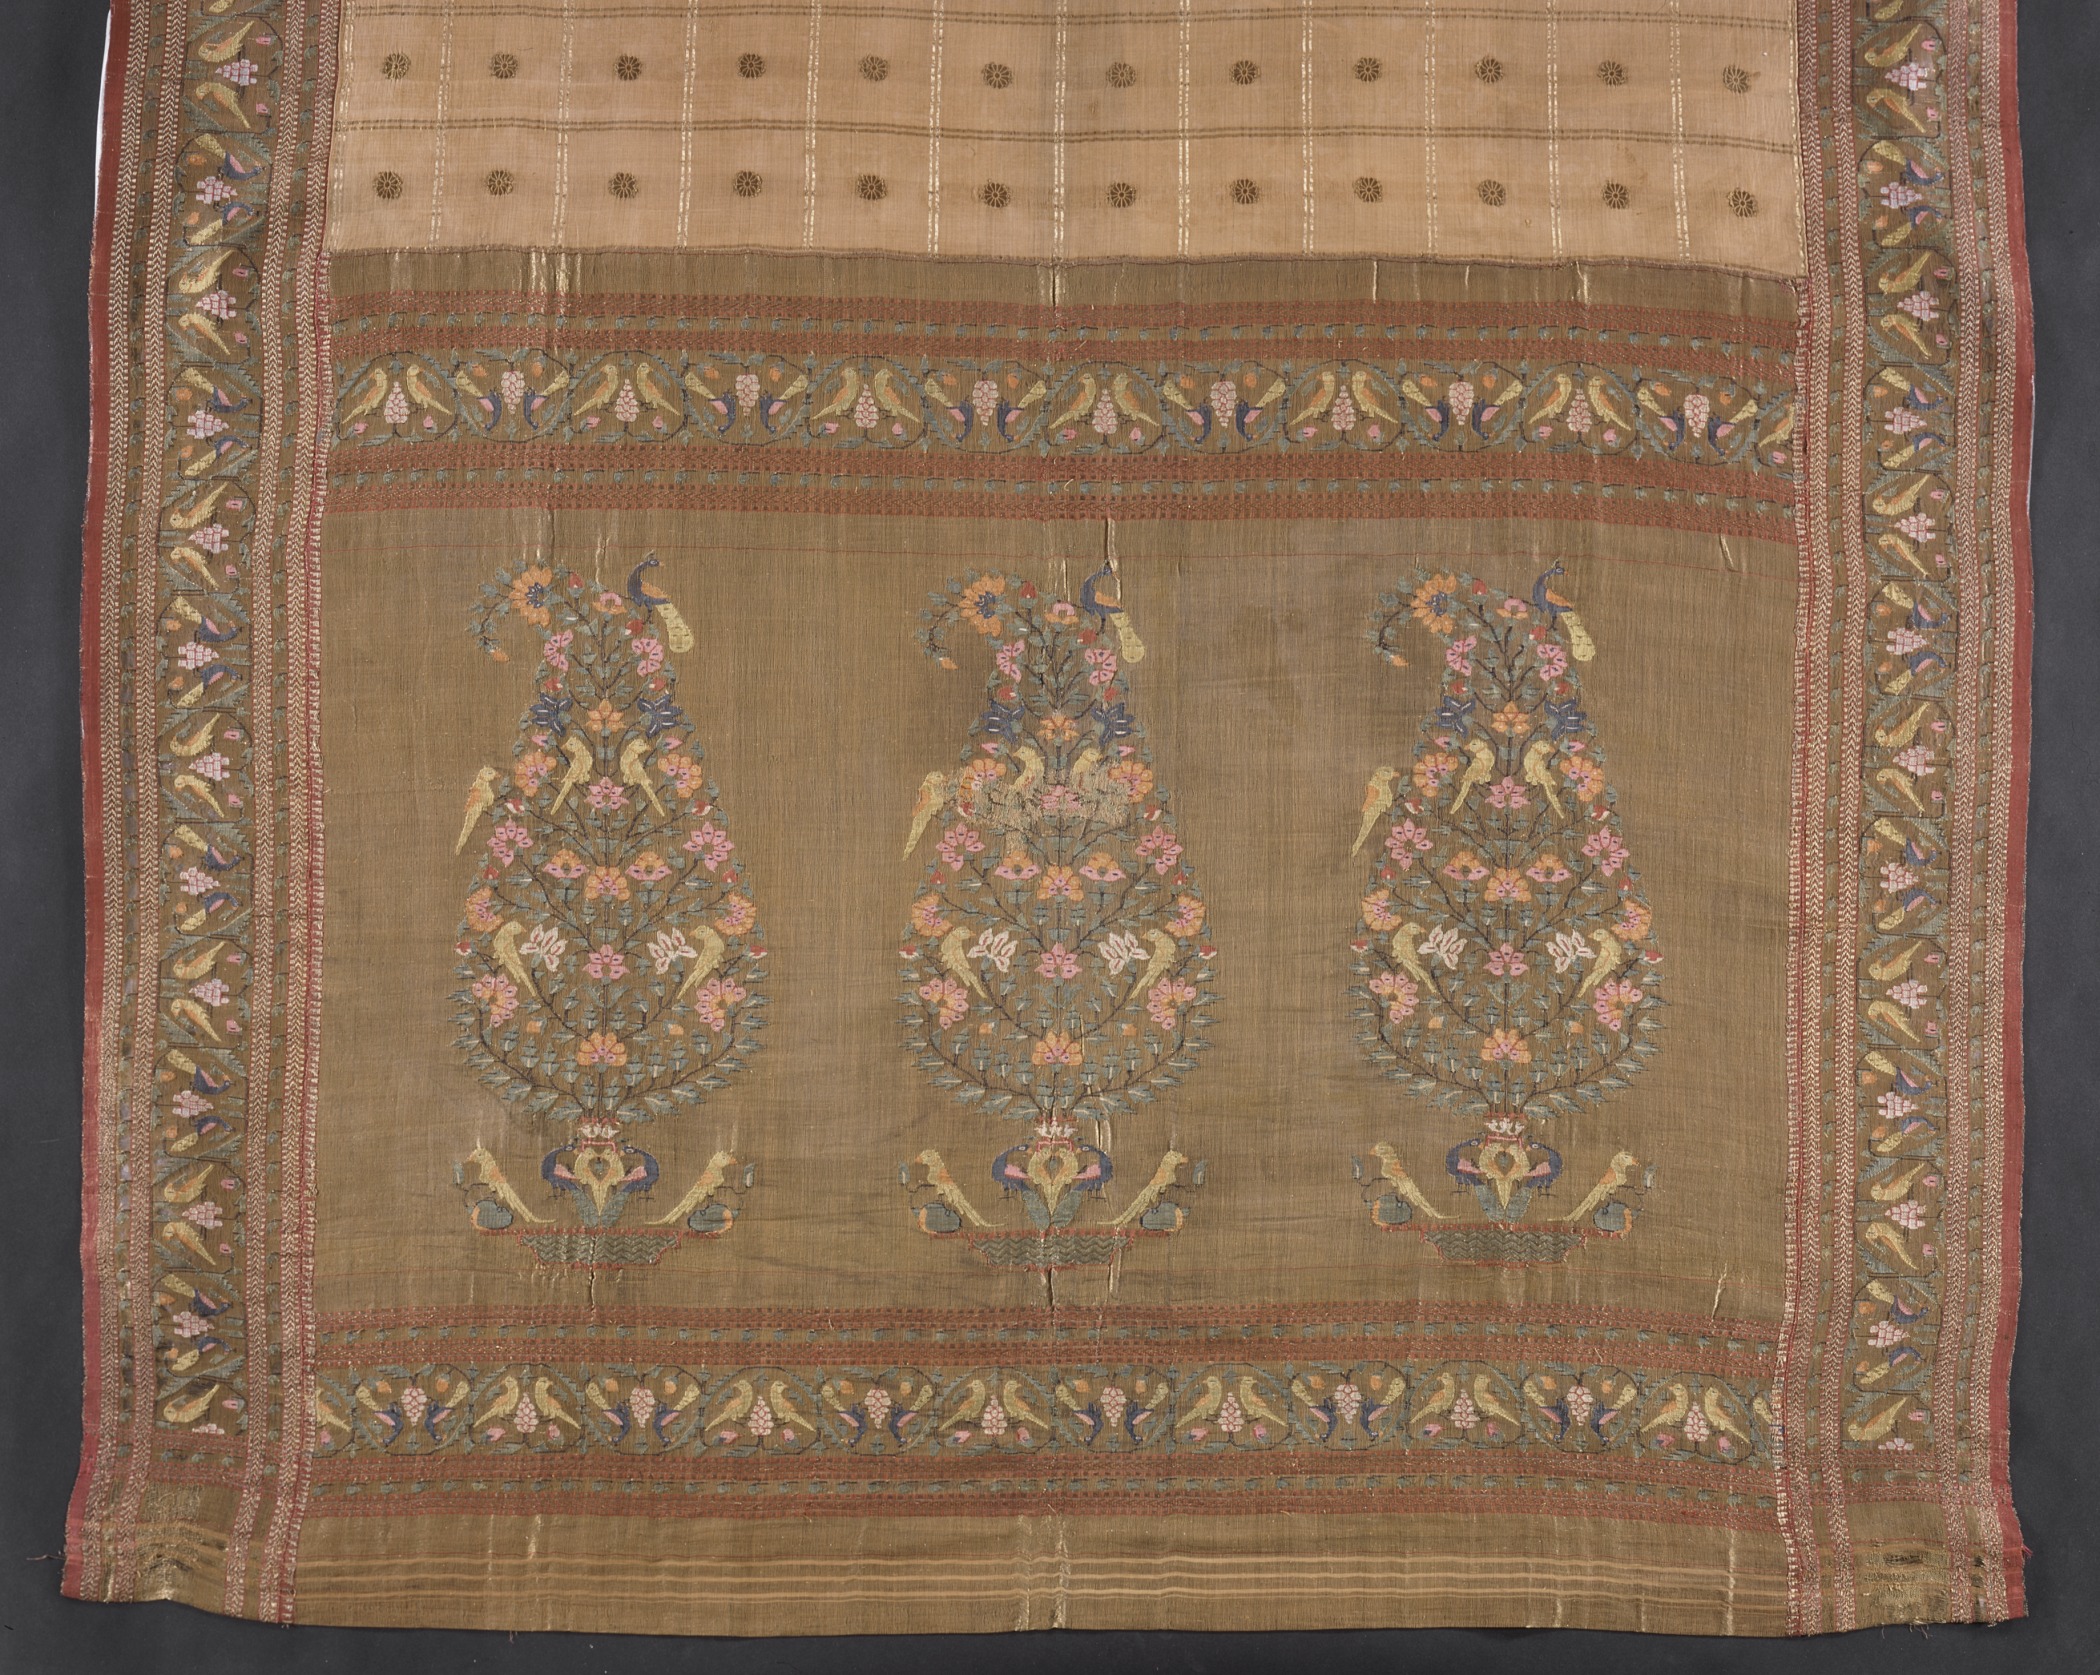 Lehenga-style sari - Wikipedia